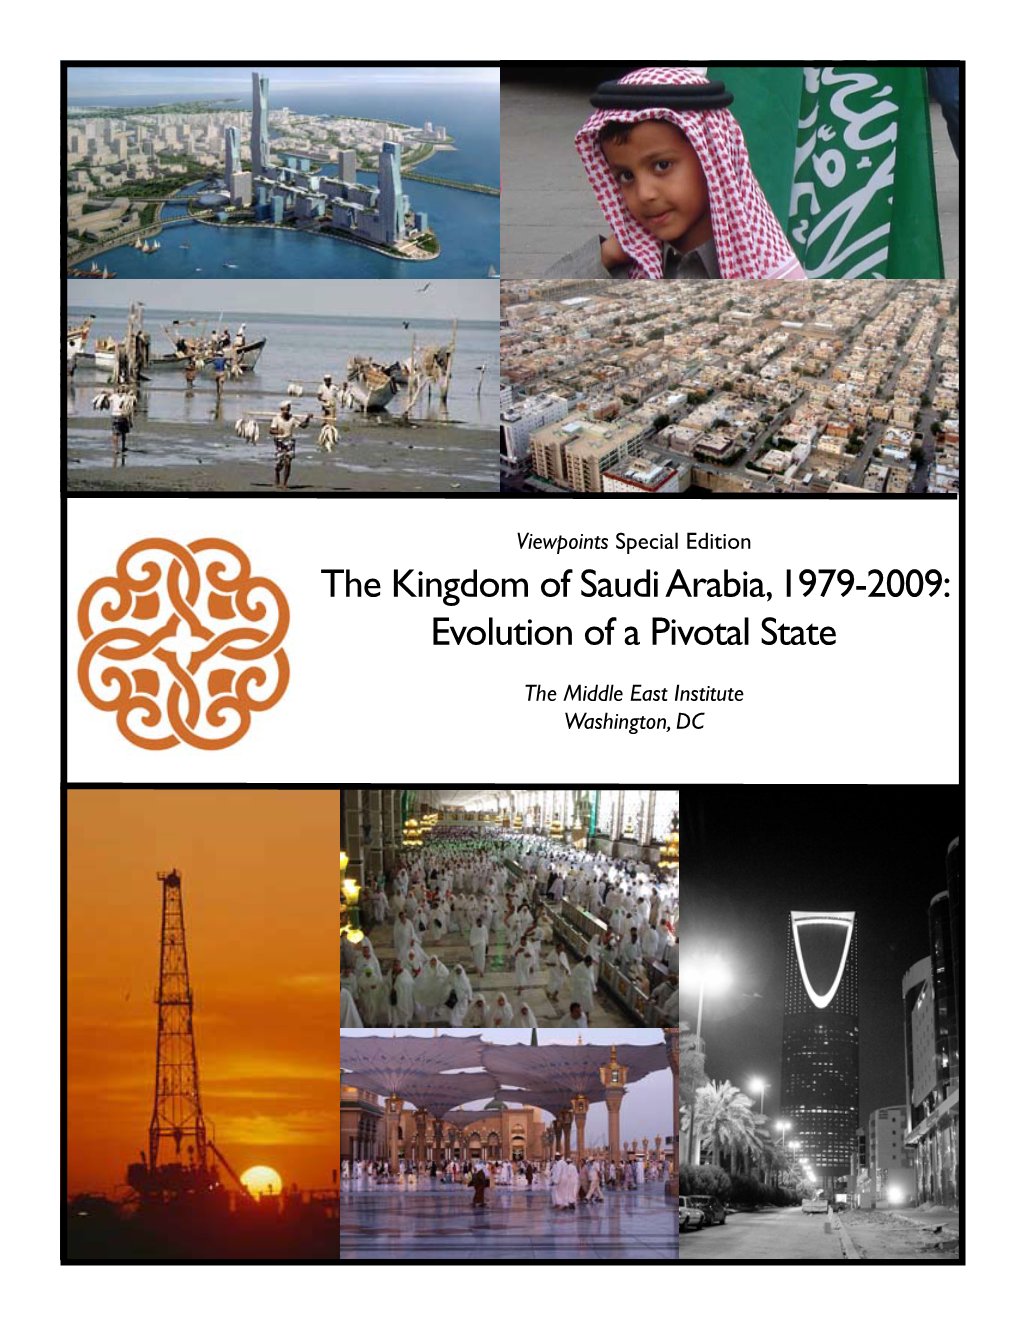 The Kingdom of Saudi Arabia, 1979-2009: Evolution of a Pivotal State